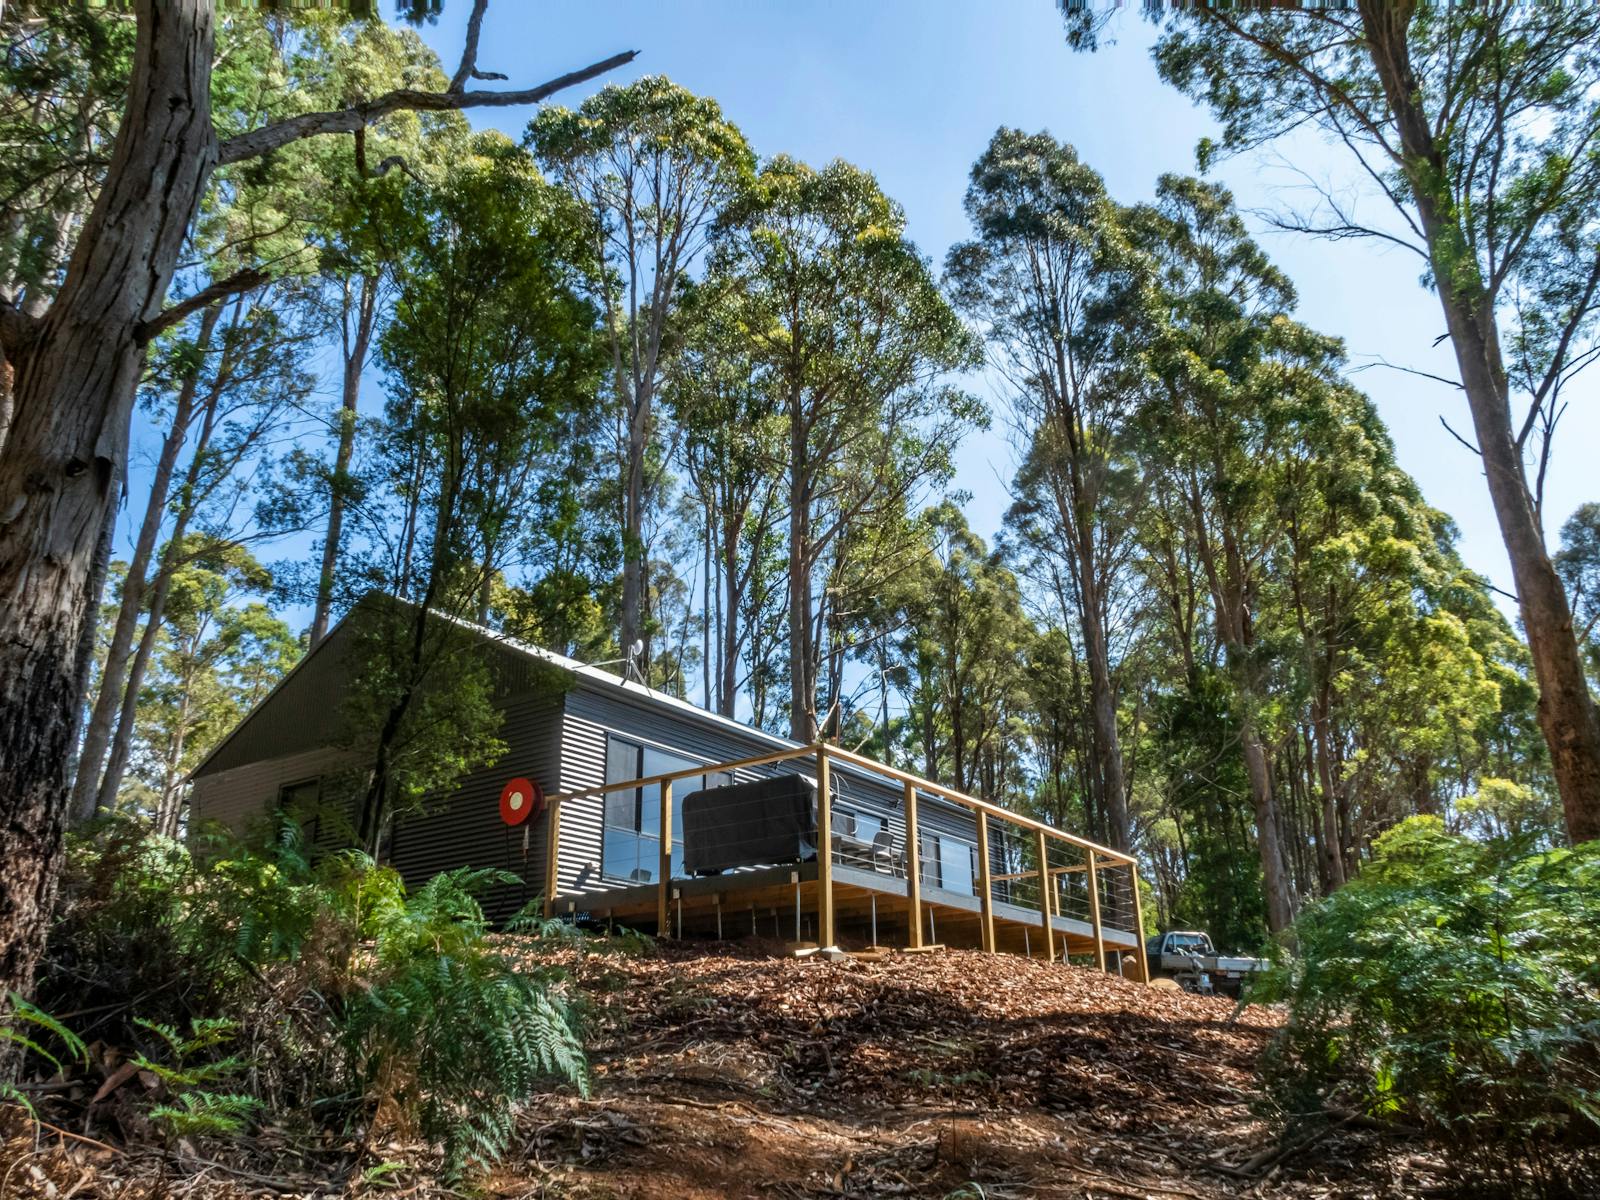 The Barn in the bush is a conference venue in Tasmania